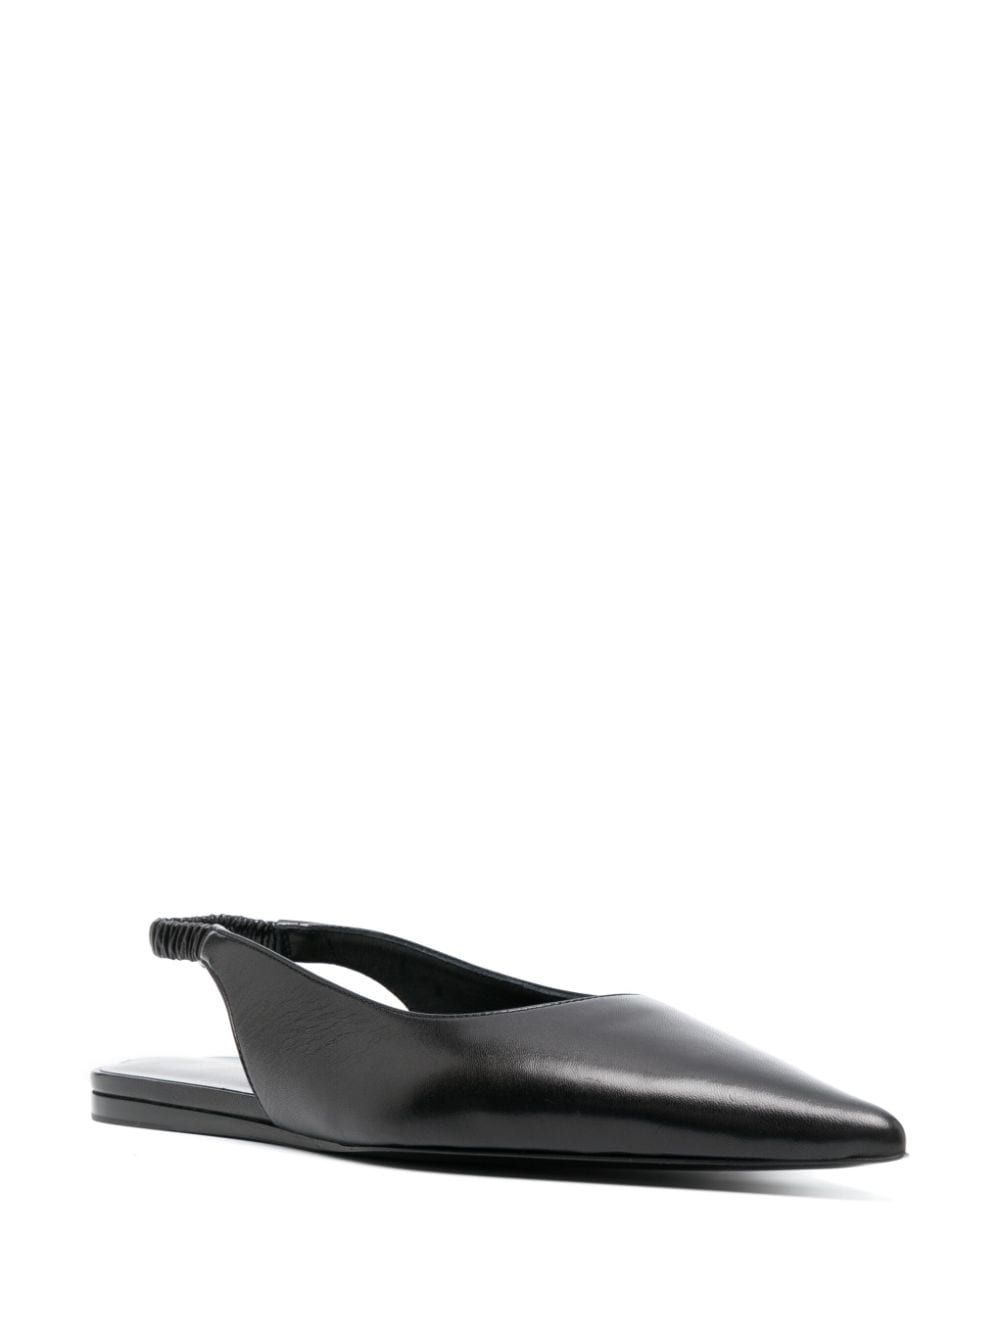 Proenza Schouler pointed-toe leather ballerina shoes - Zwart